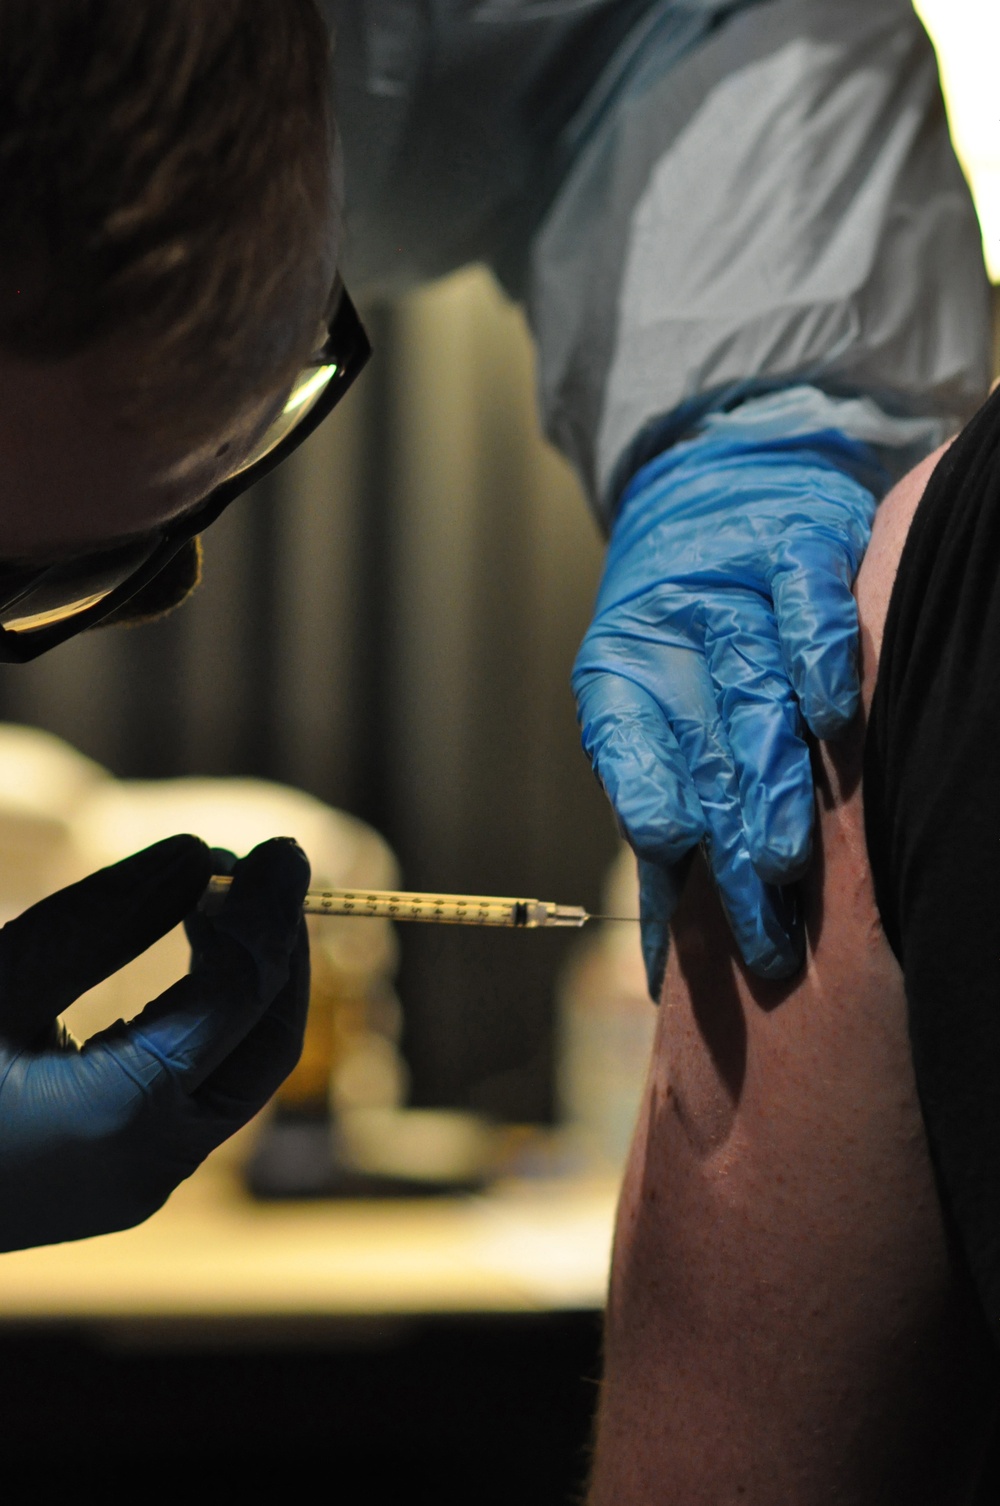 Oregon Guard, Confederated Tribes of the Umatilla hold COVID vaccination clinic